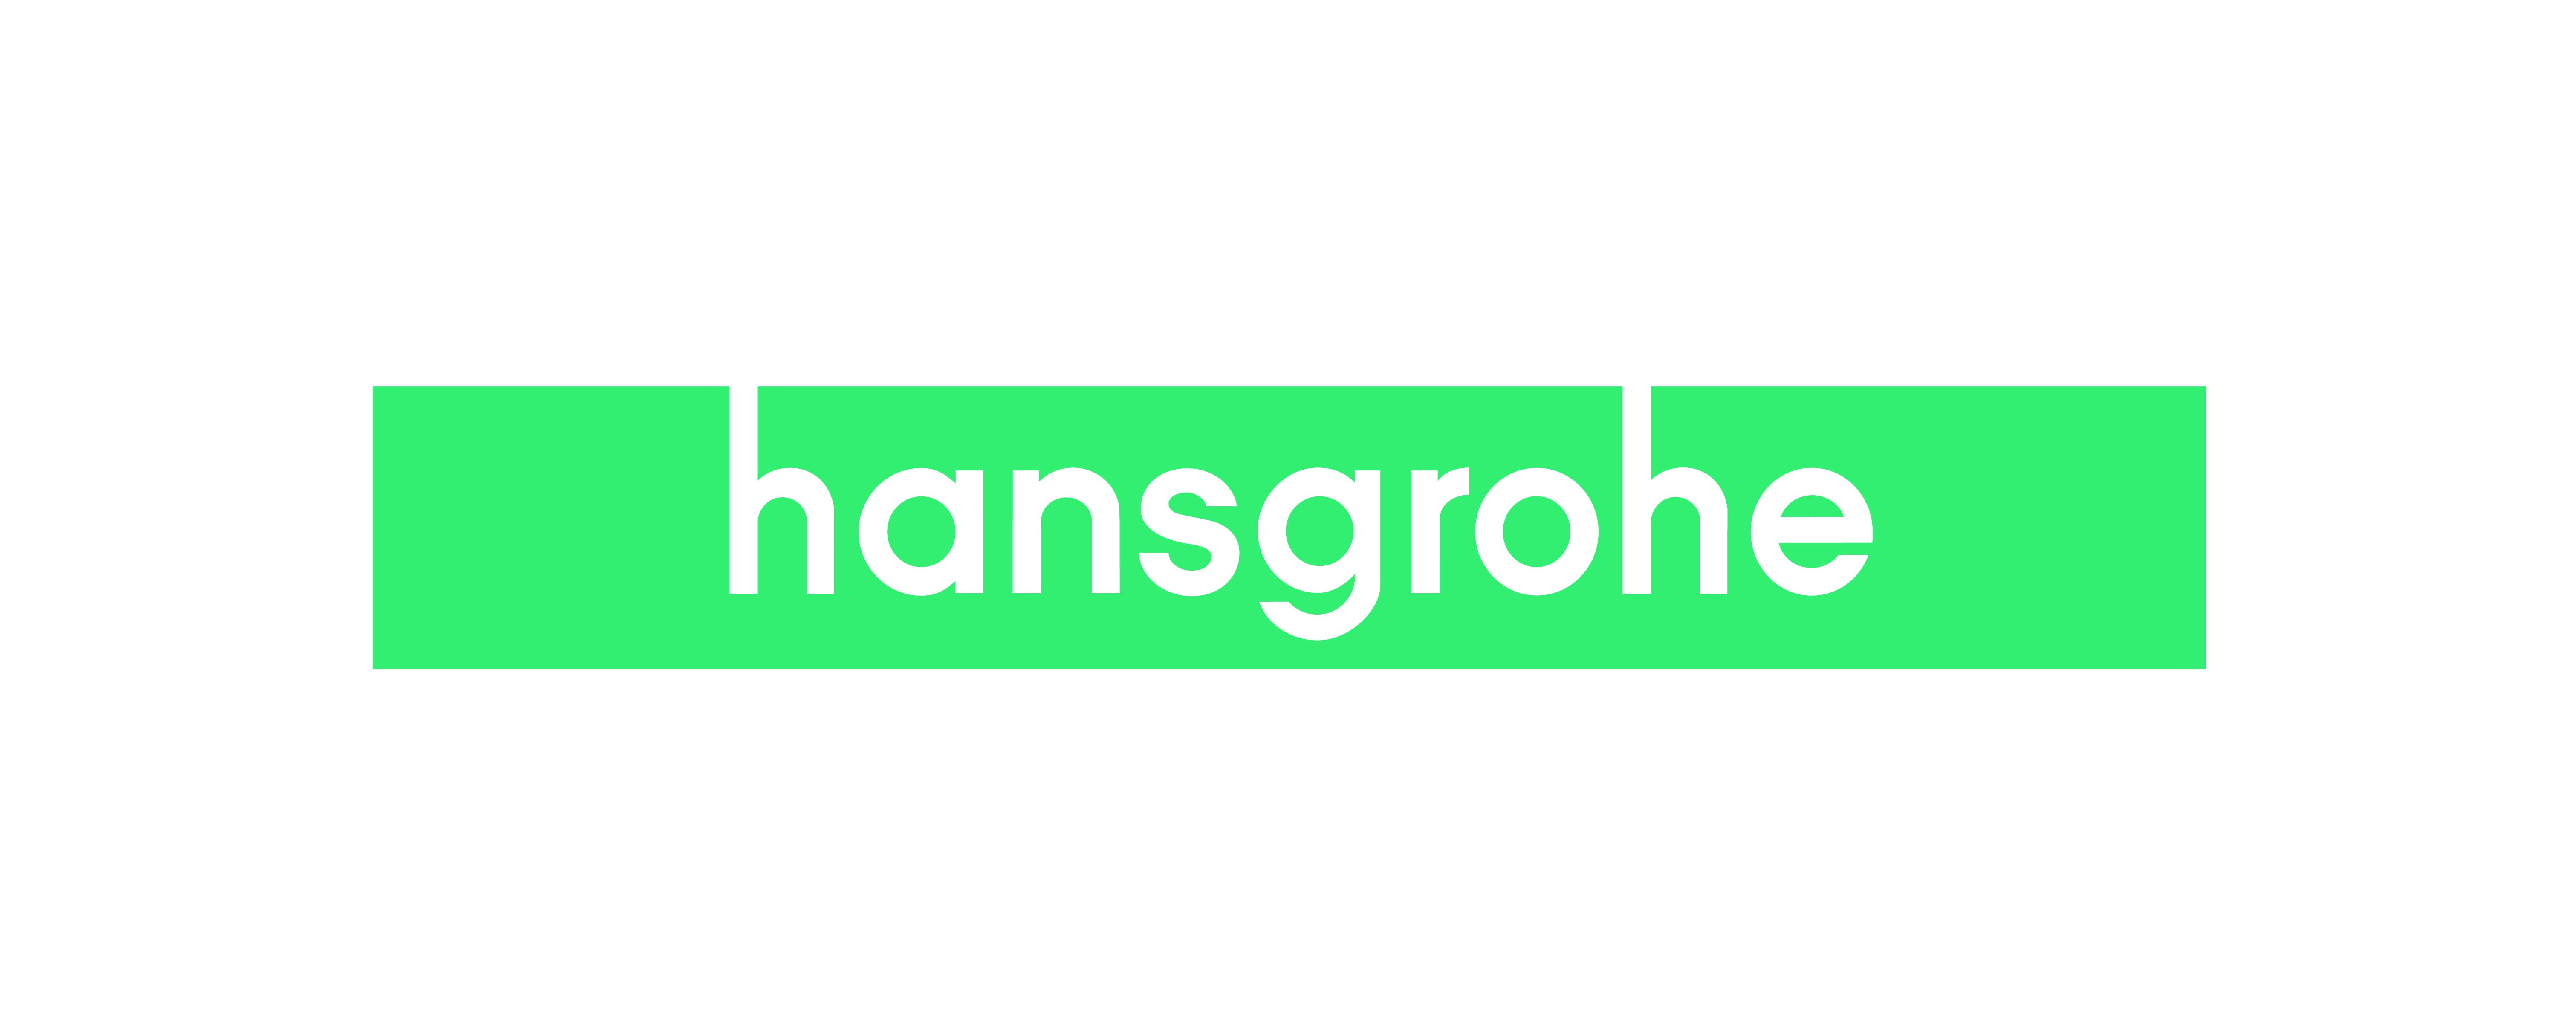 Hansgrohe Pte. Ltd